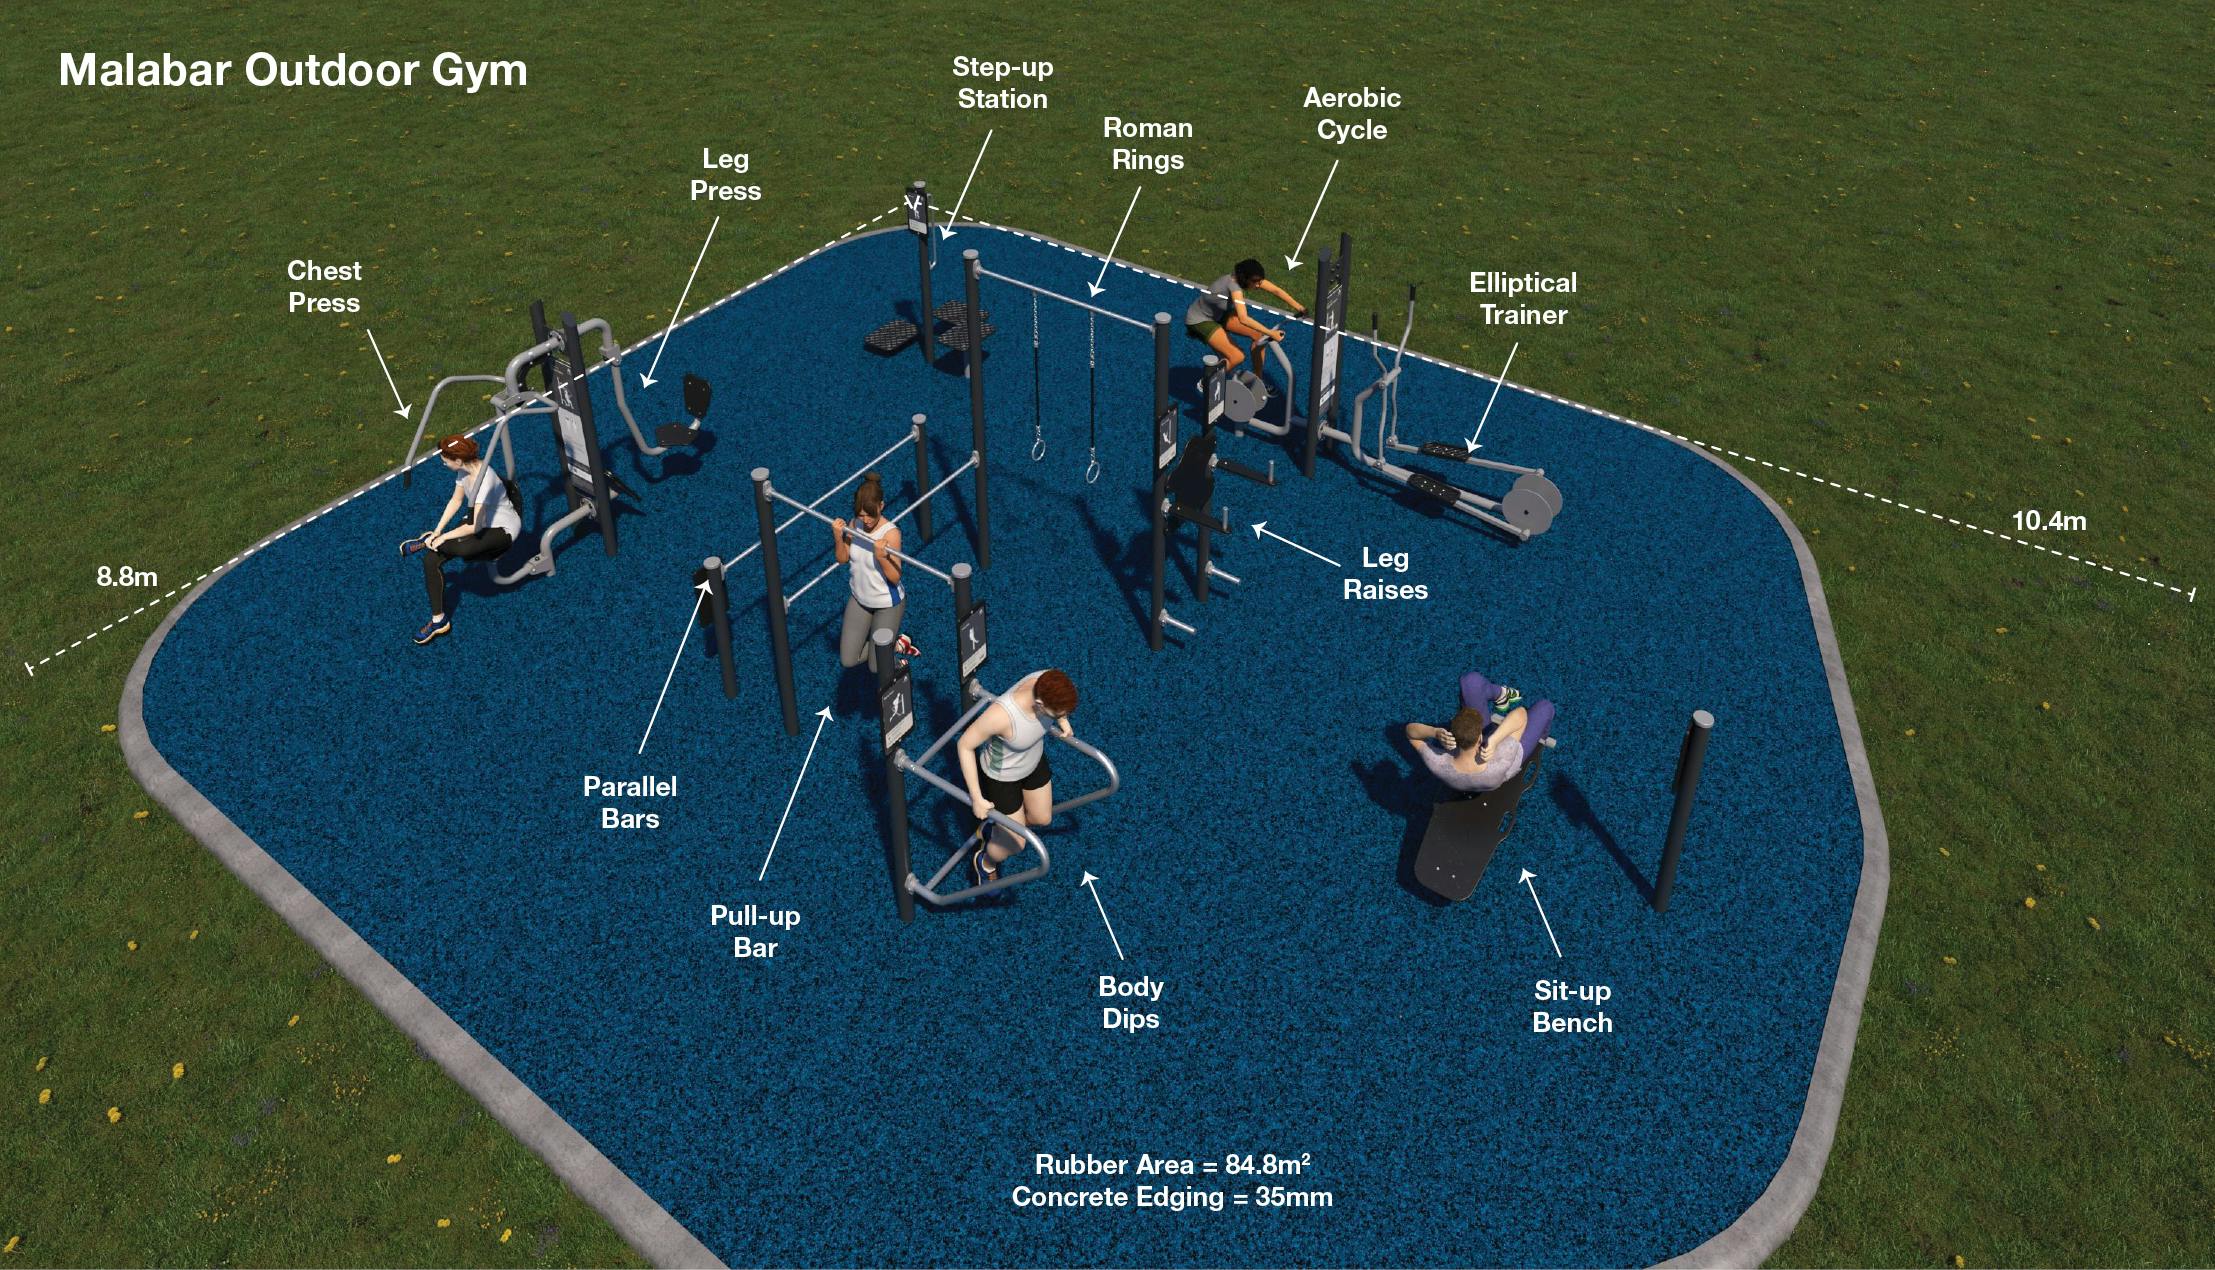 Malabar outdoor gym layout